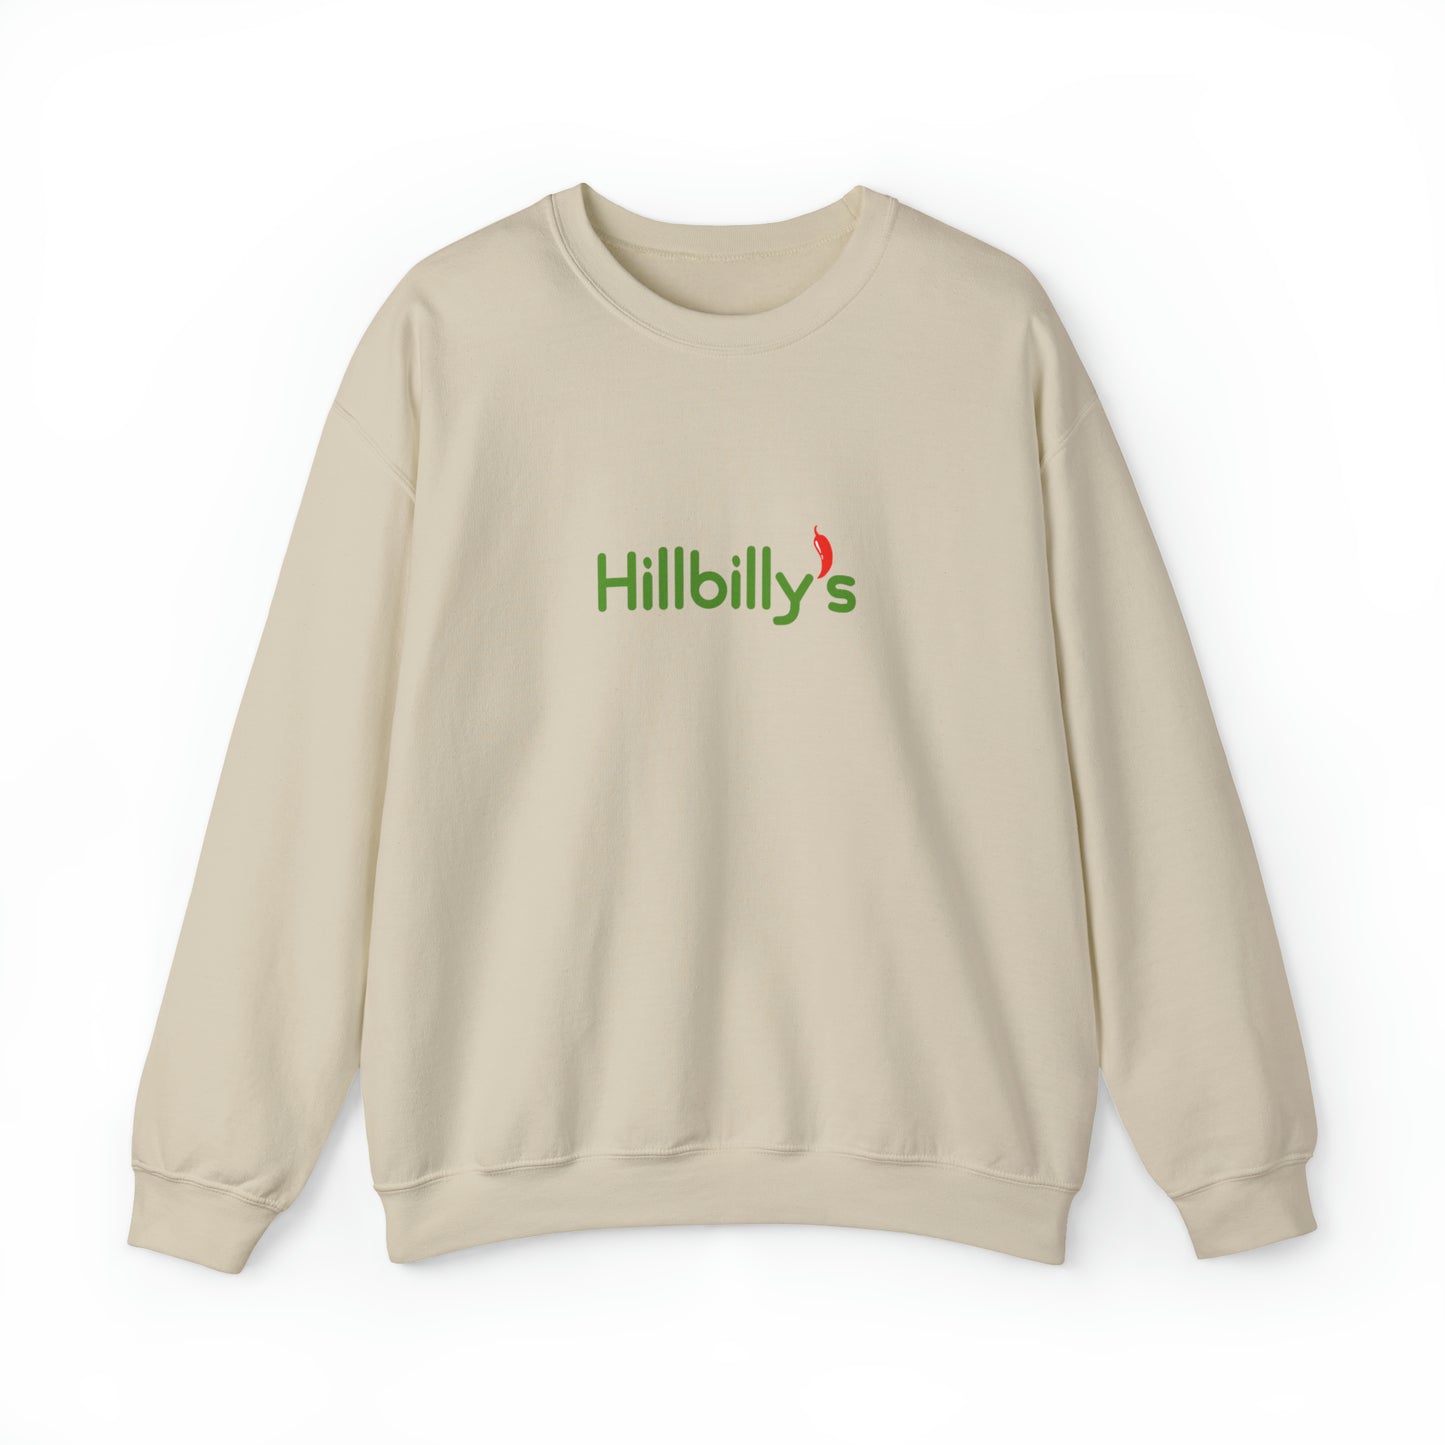 Custom Parody Crewneck Sweatshirt, Hillbilly's Design